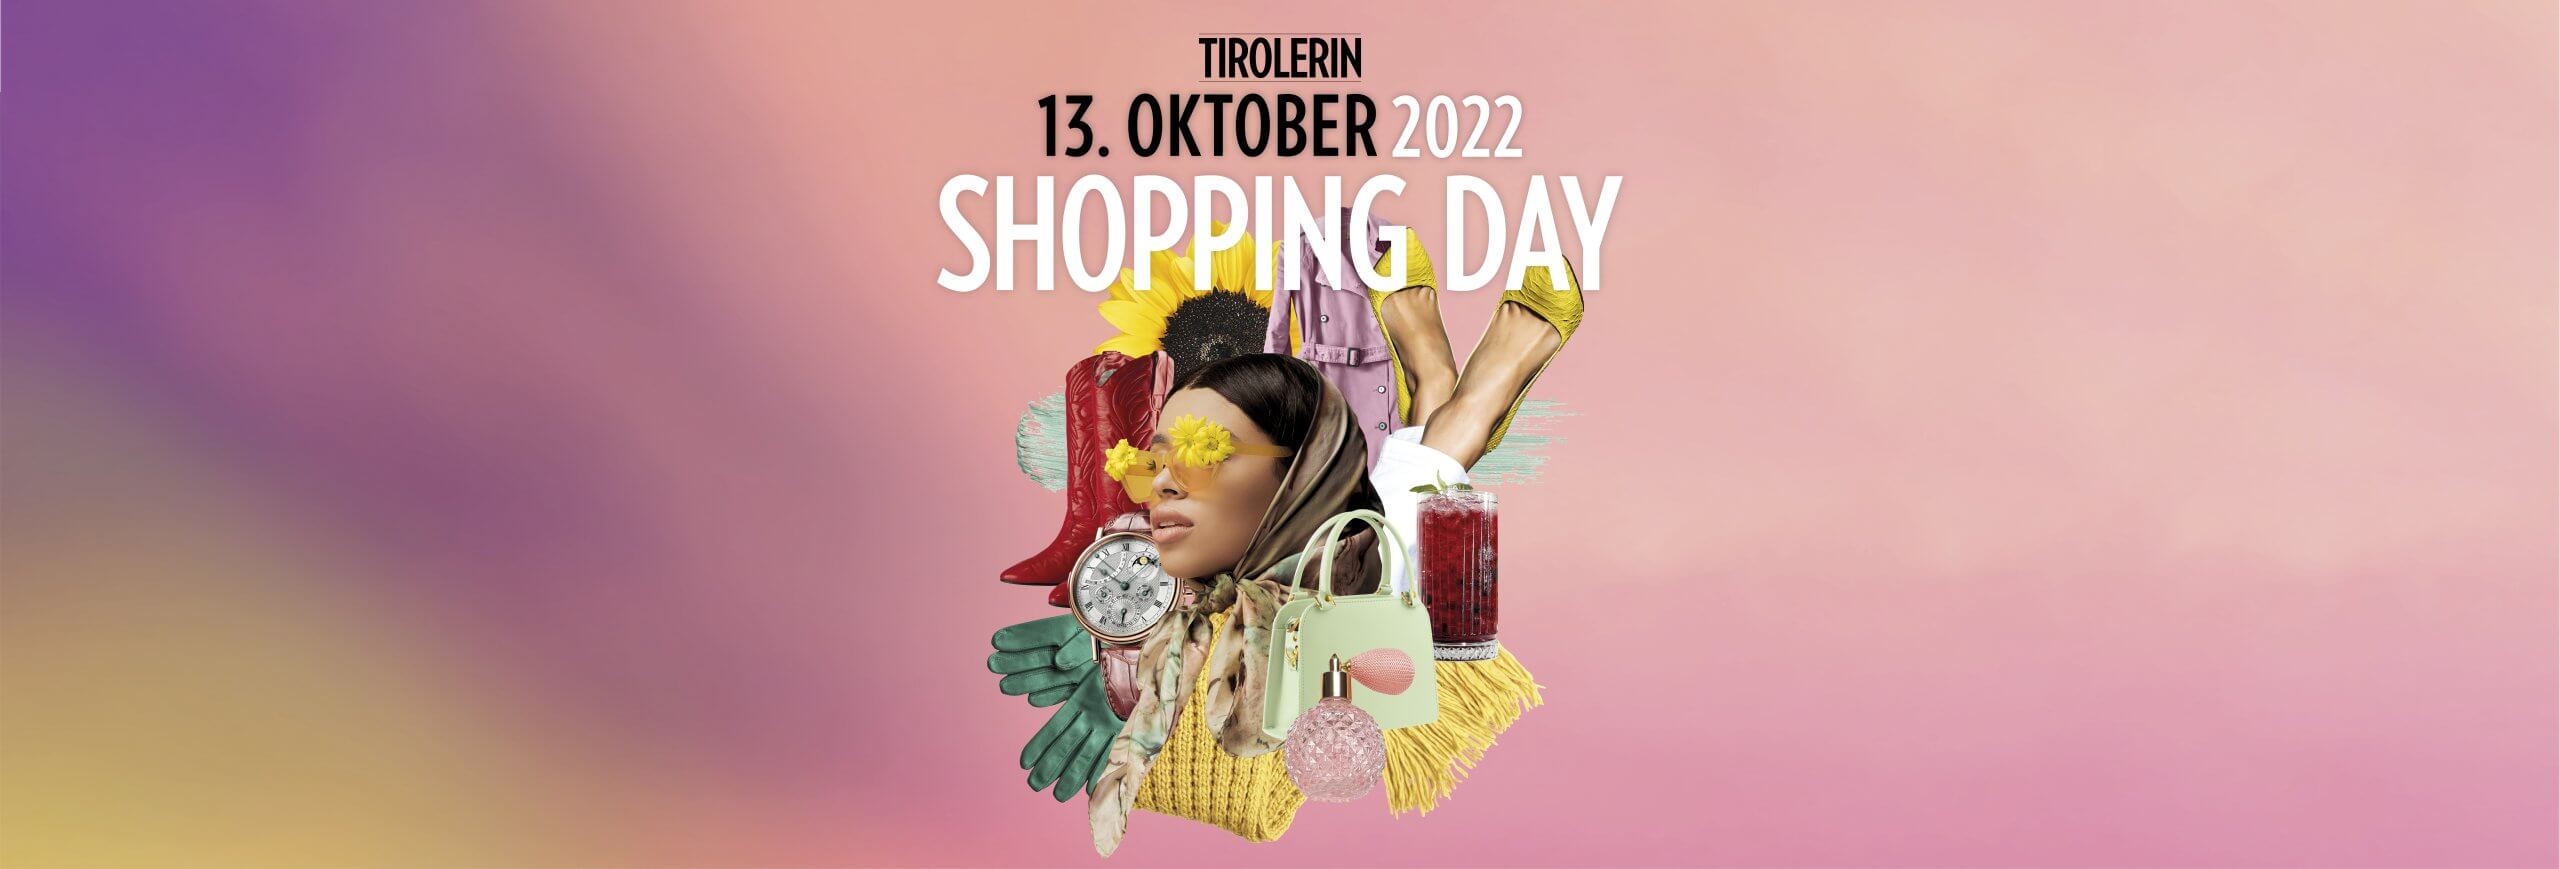 Tirolerin Shopping Day